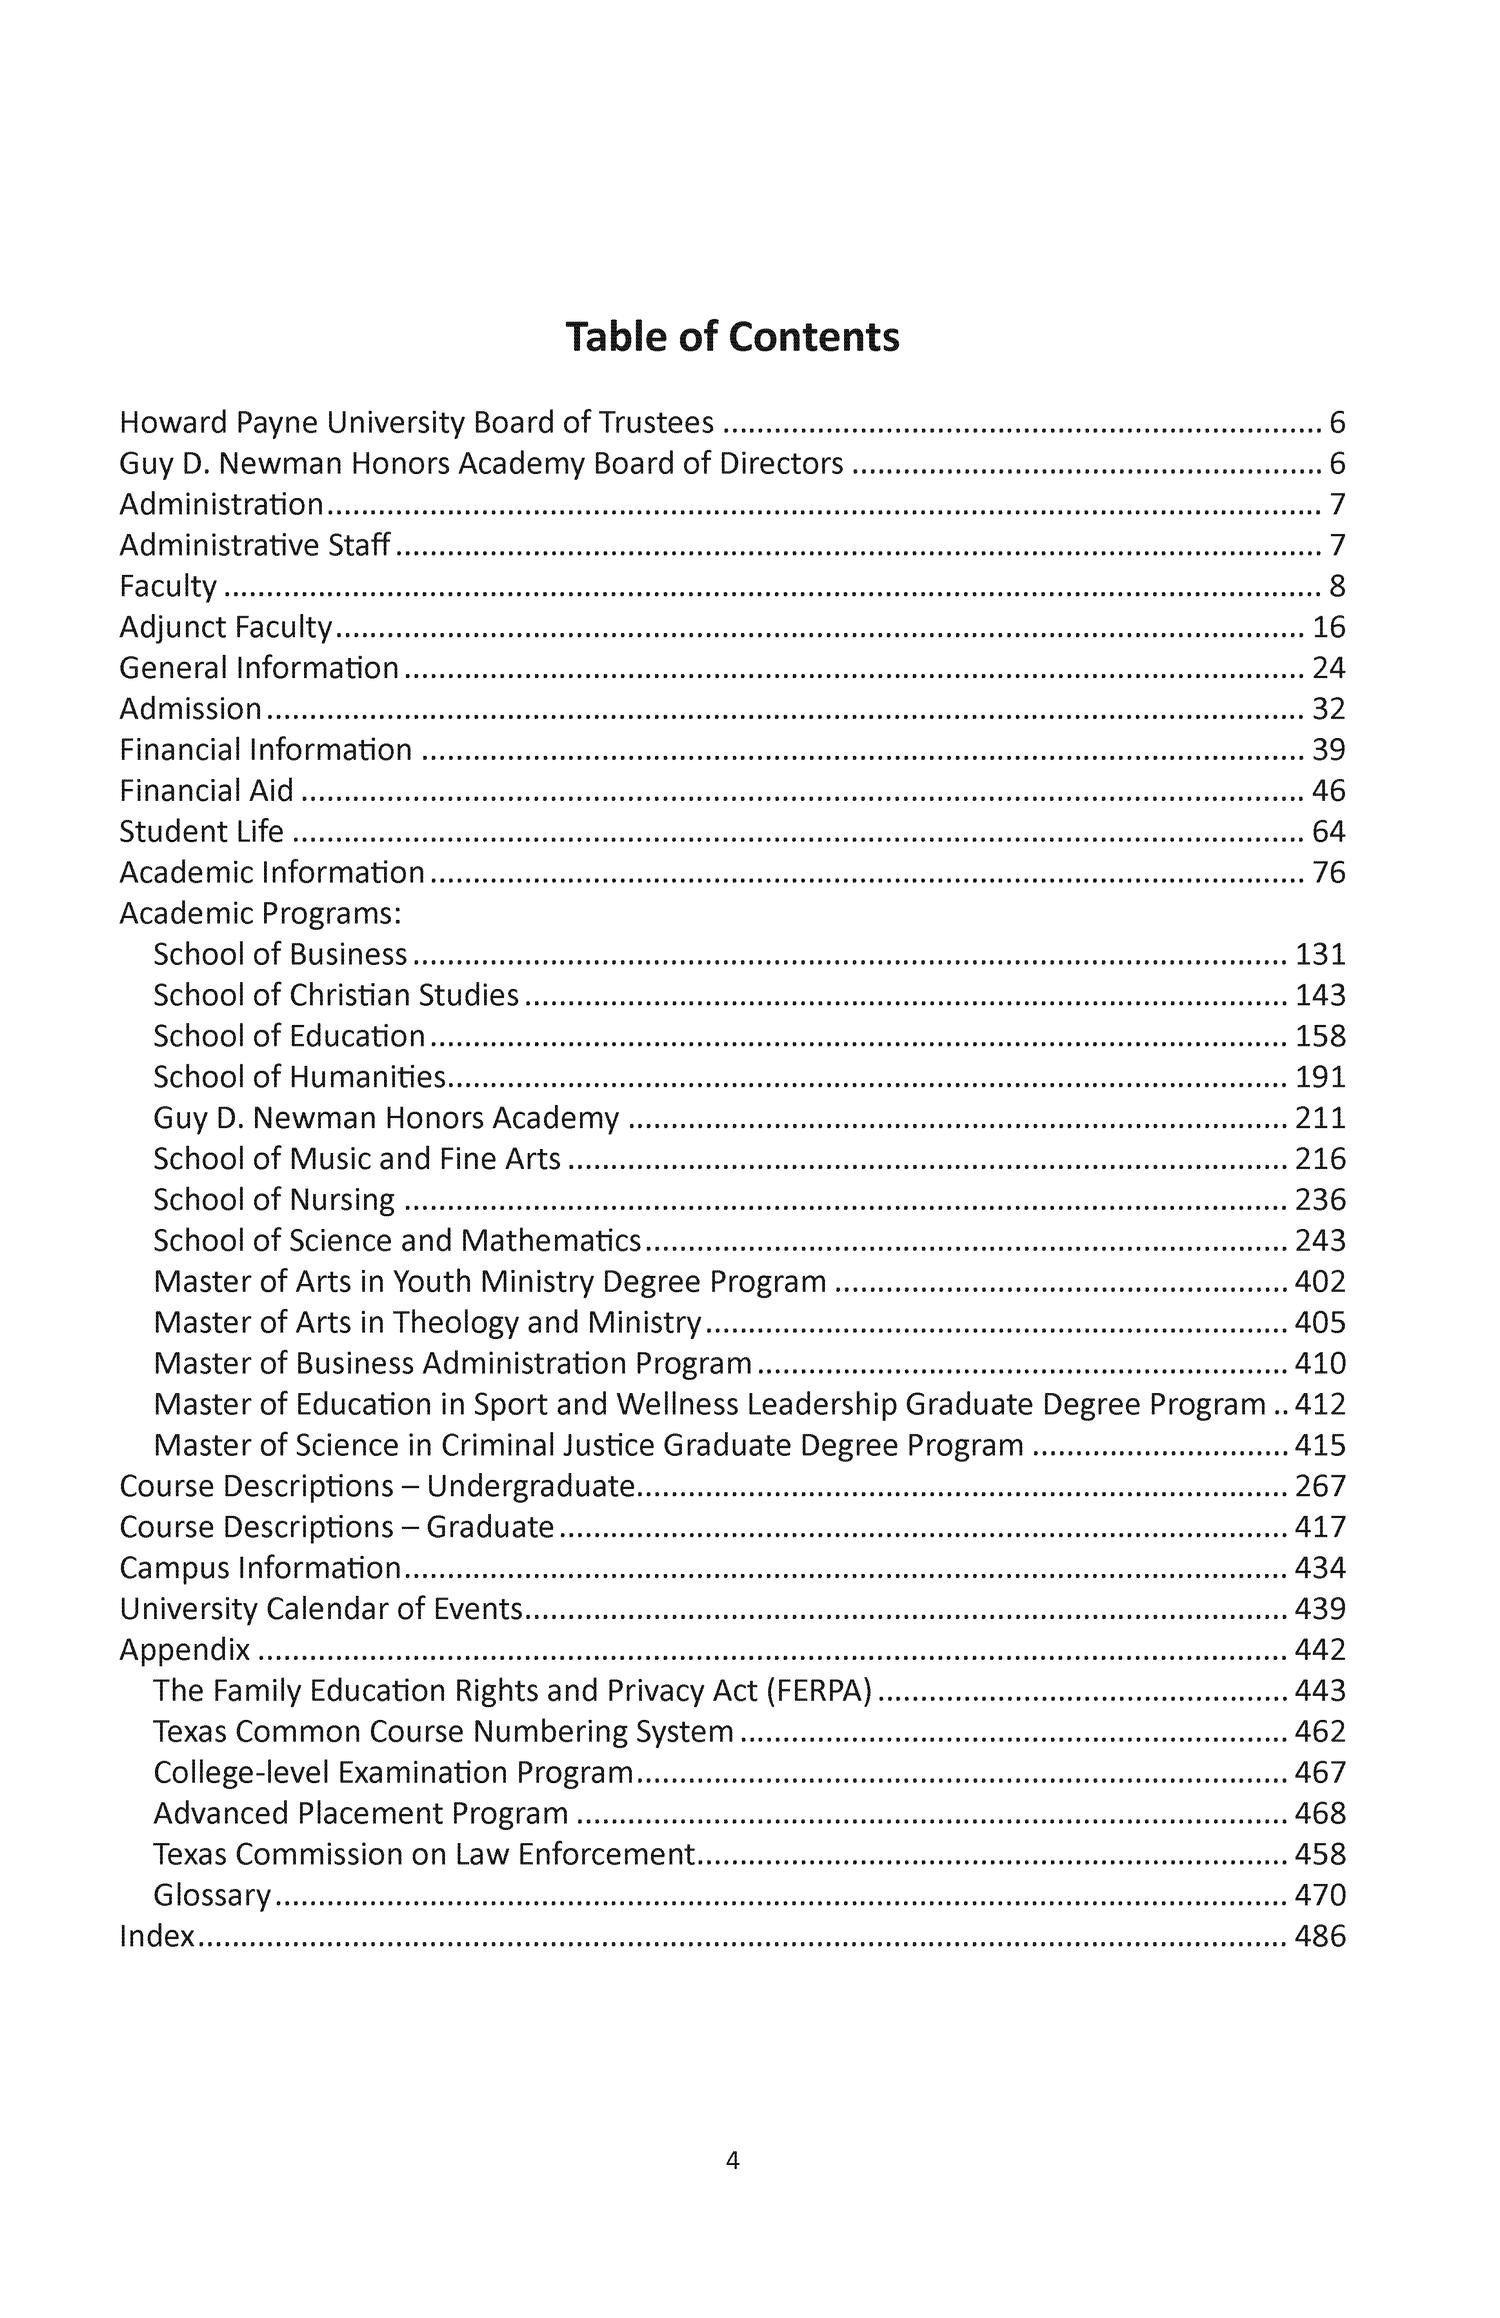 Catalog of Howard Payne University, 2018-2019
                                                
                                                    4
                                                